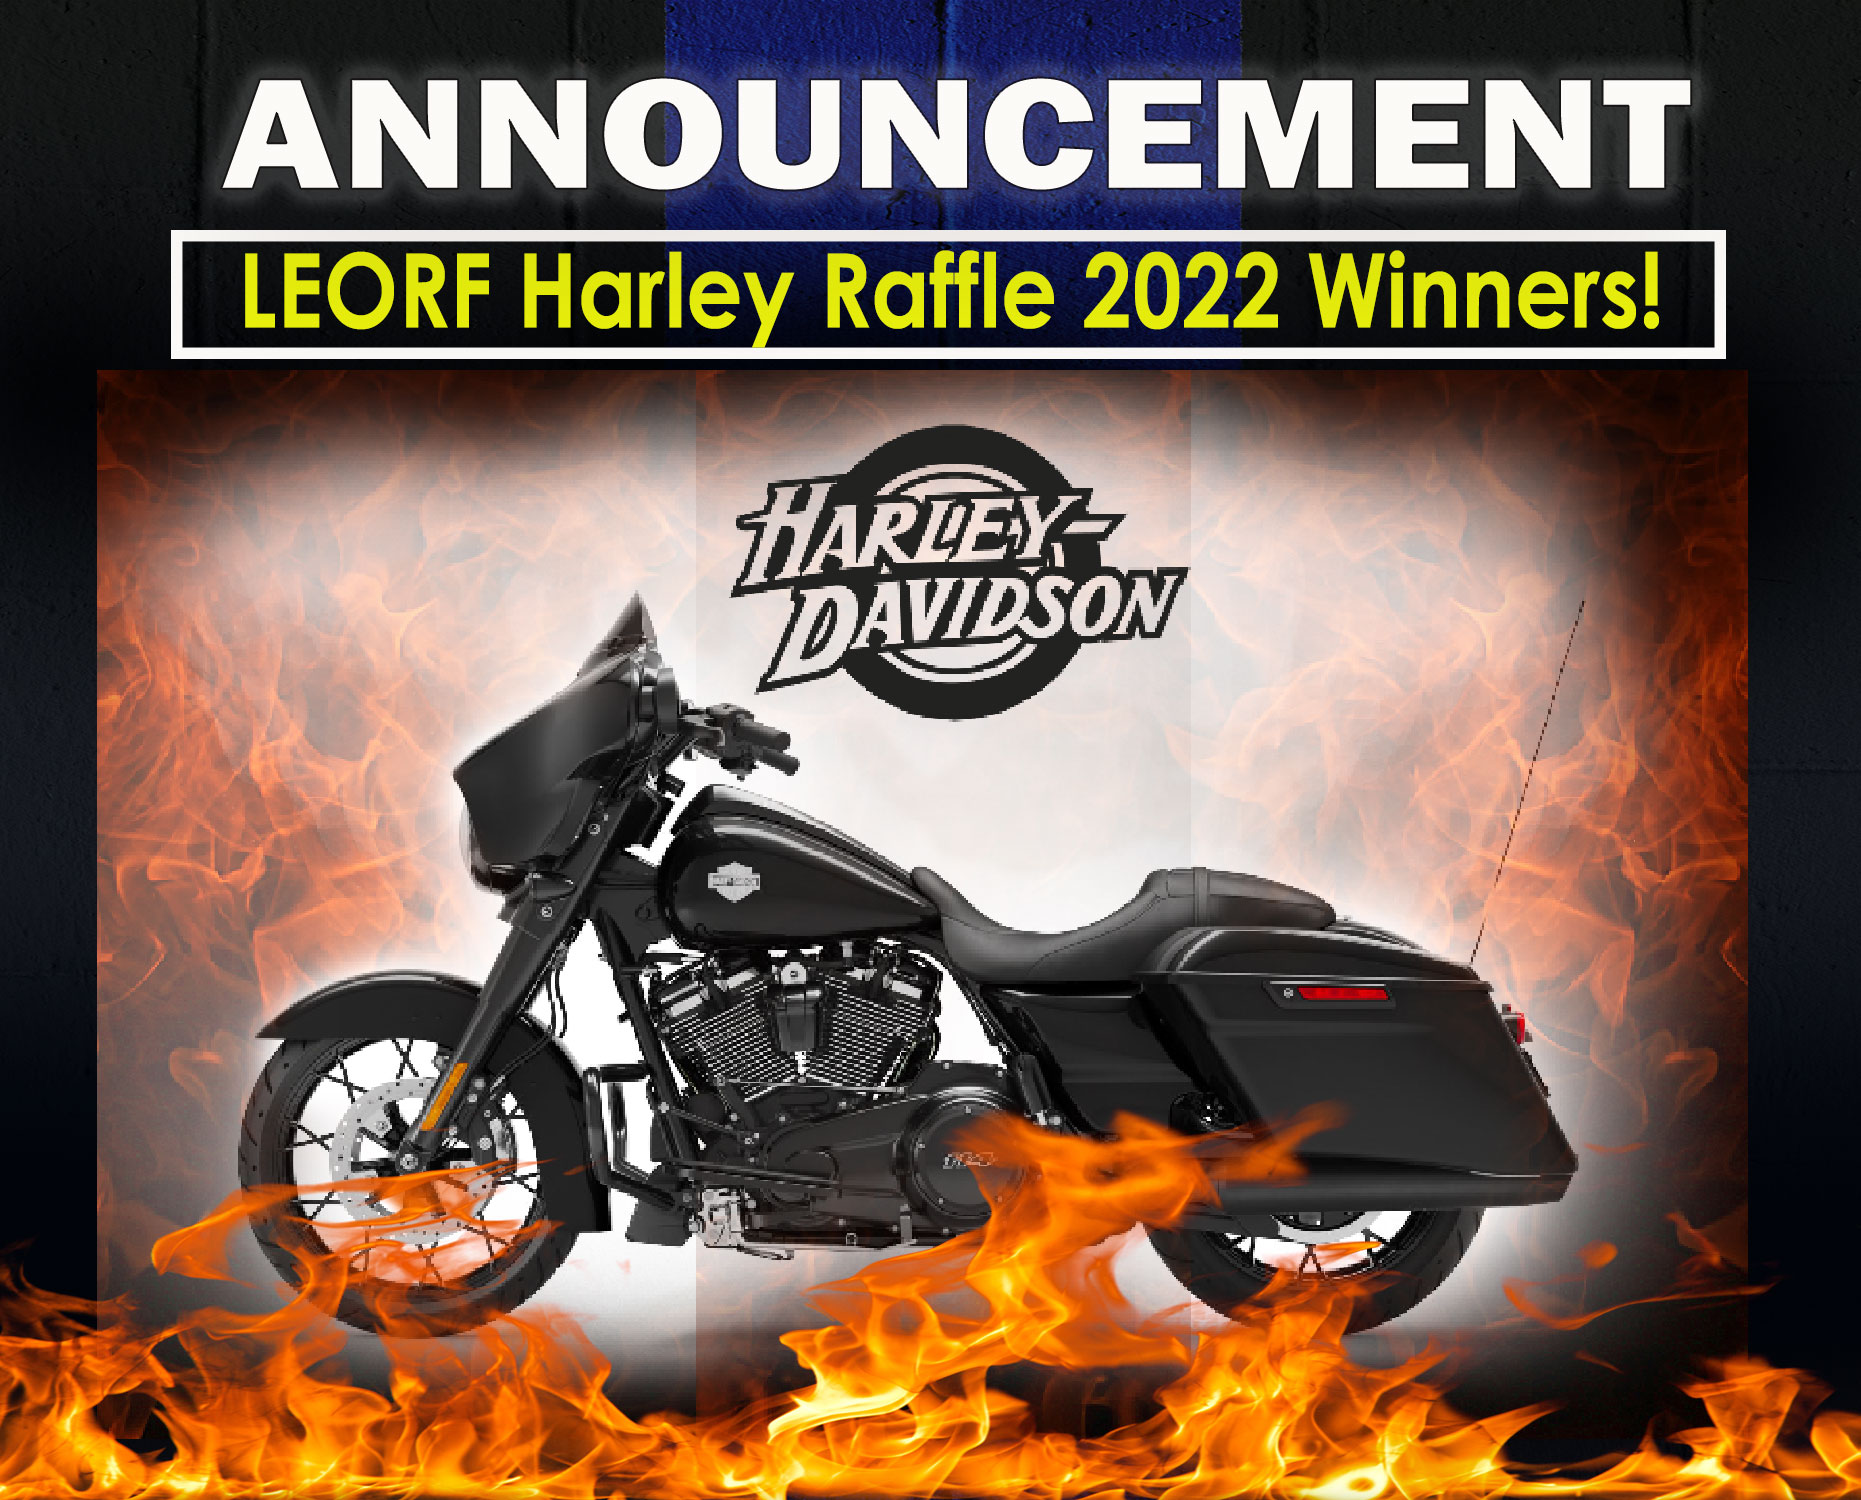 Announcement: LEORF Harley Raffle 2022 Winners!